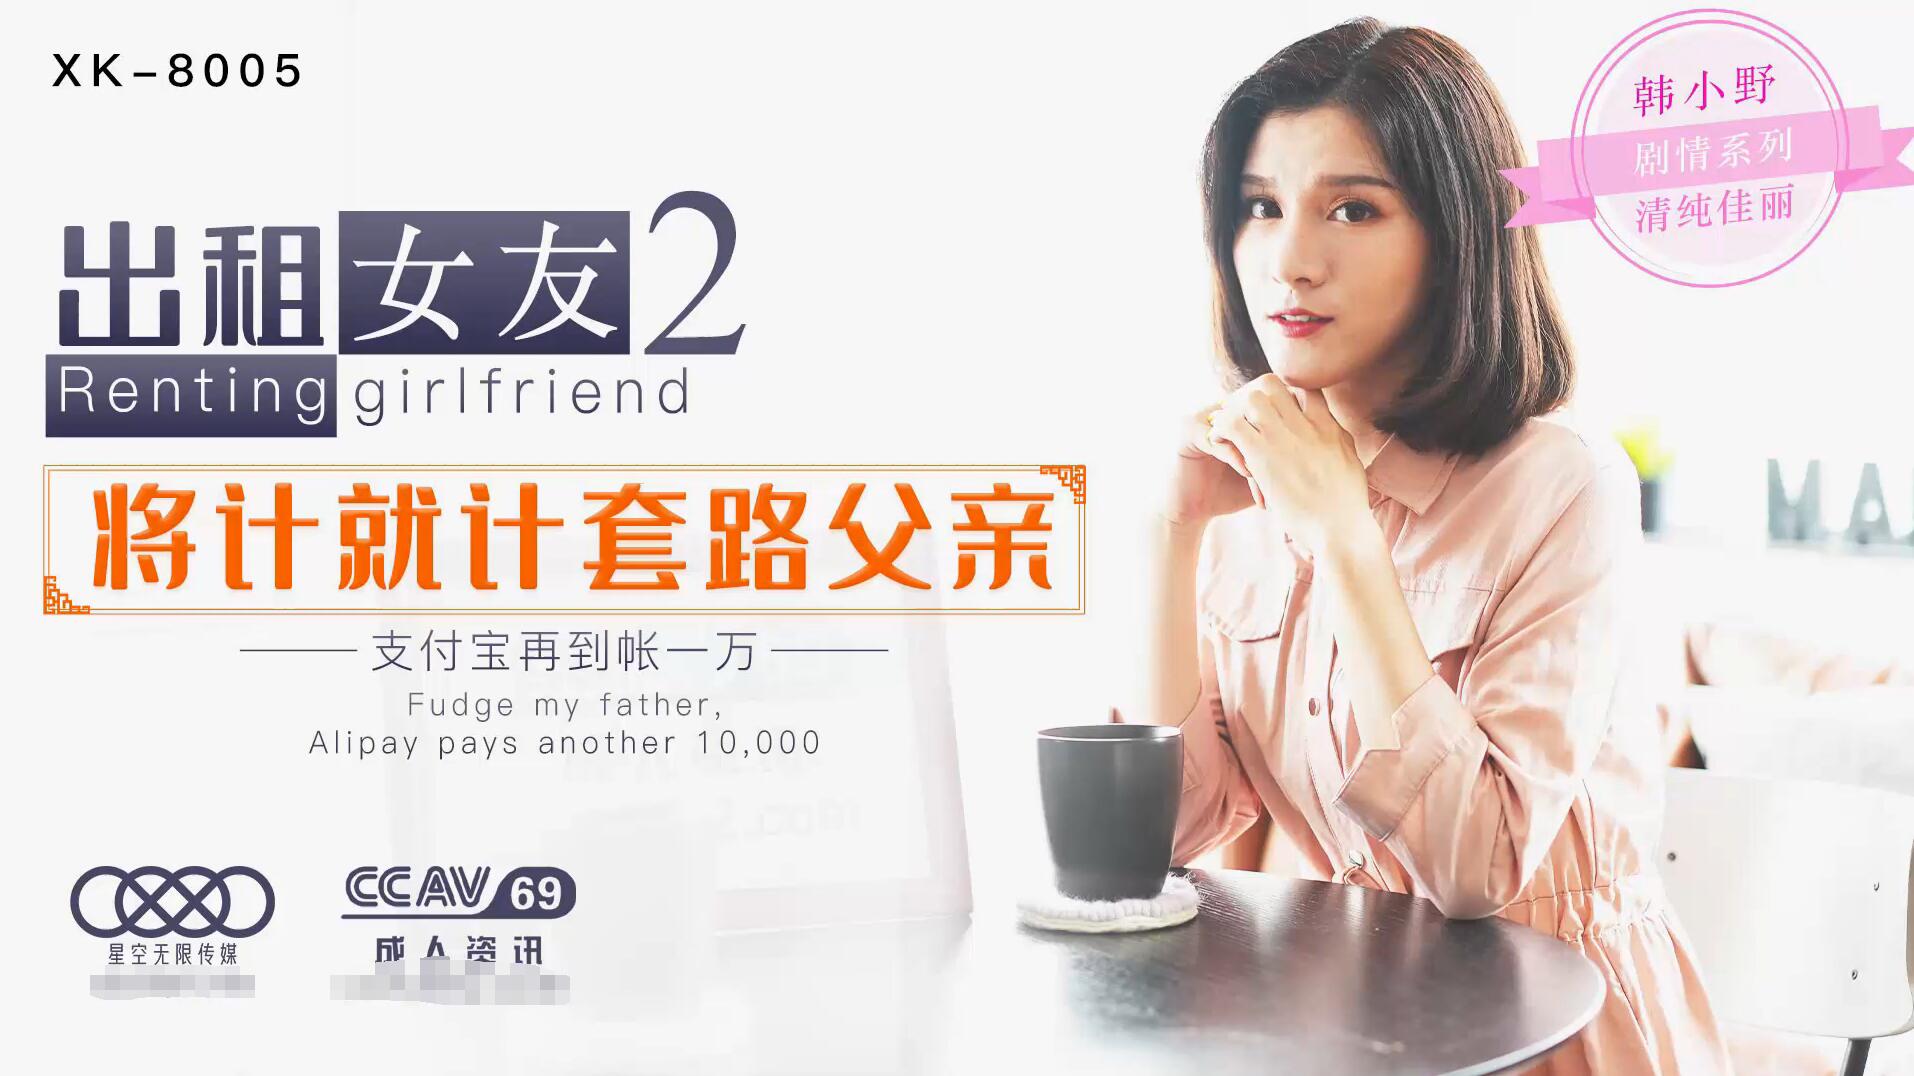 Starry Media XK-8005 Rental Girlfriend 2 - Han Xiaono